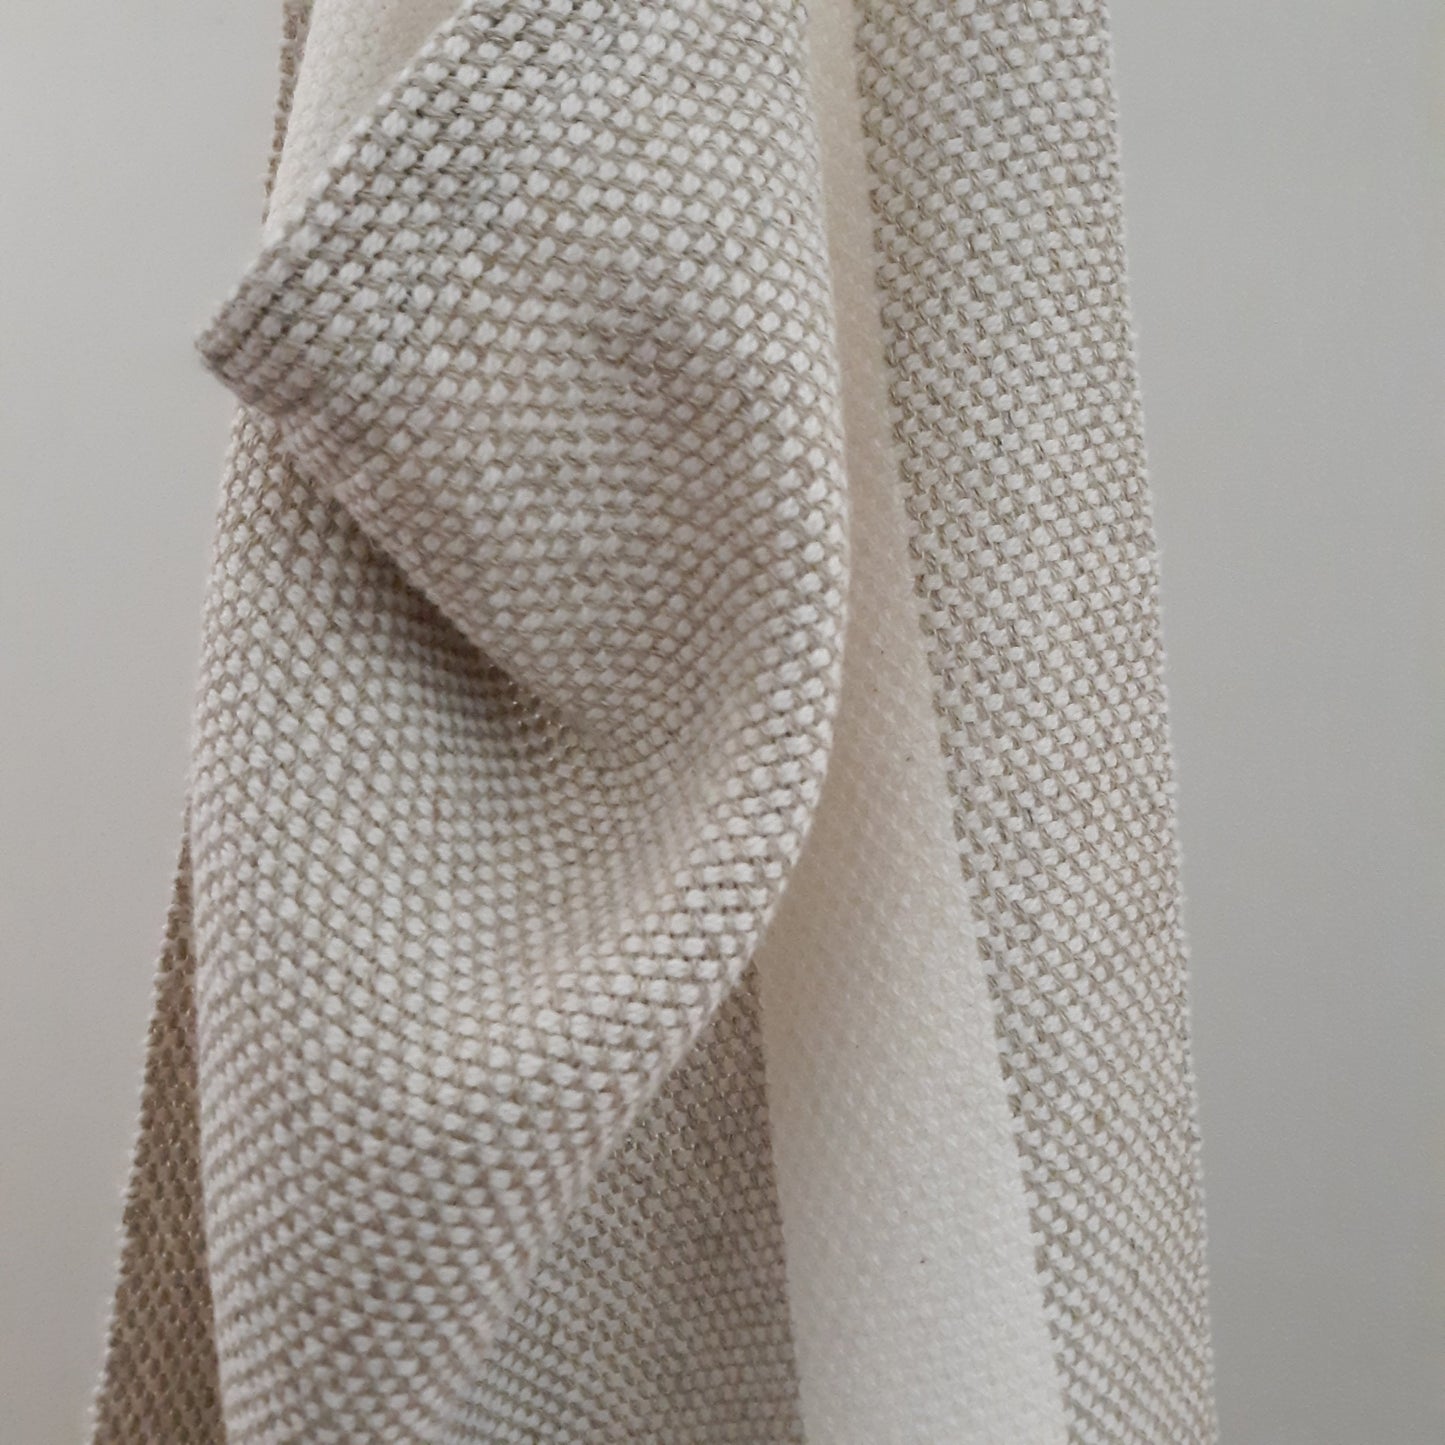 Hemp-Cotton Dish Towel with Stripe